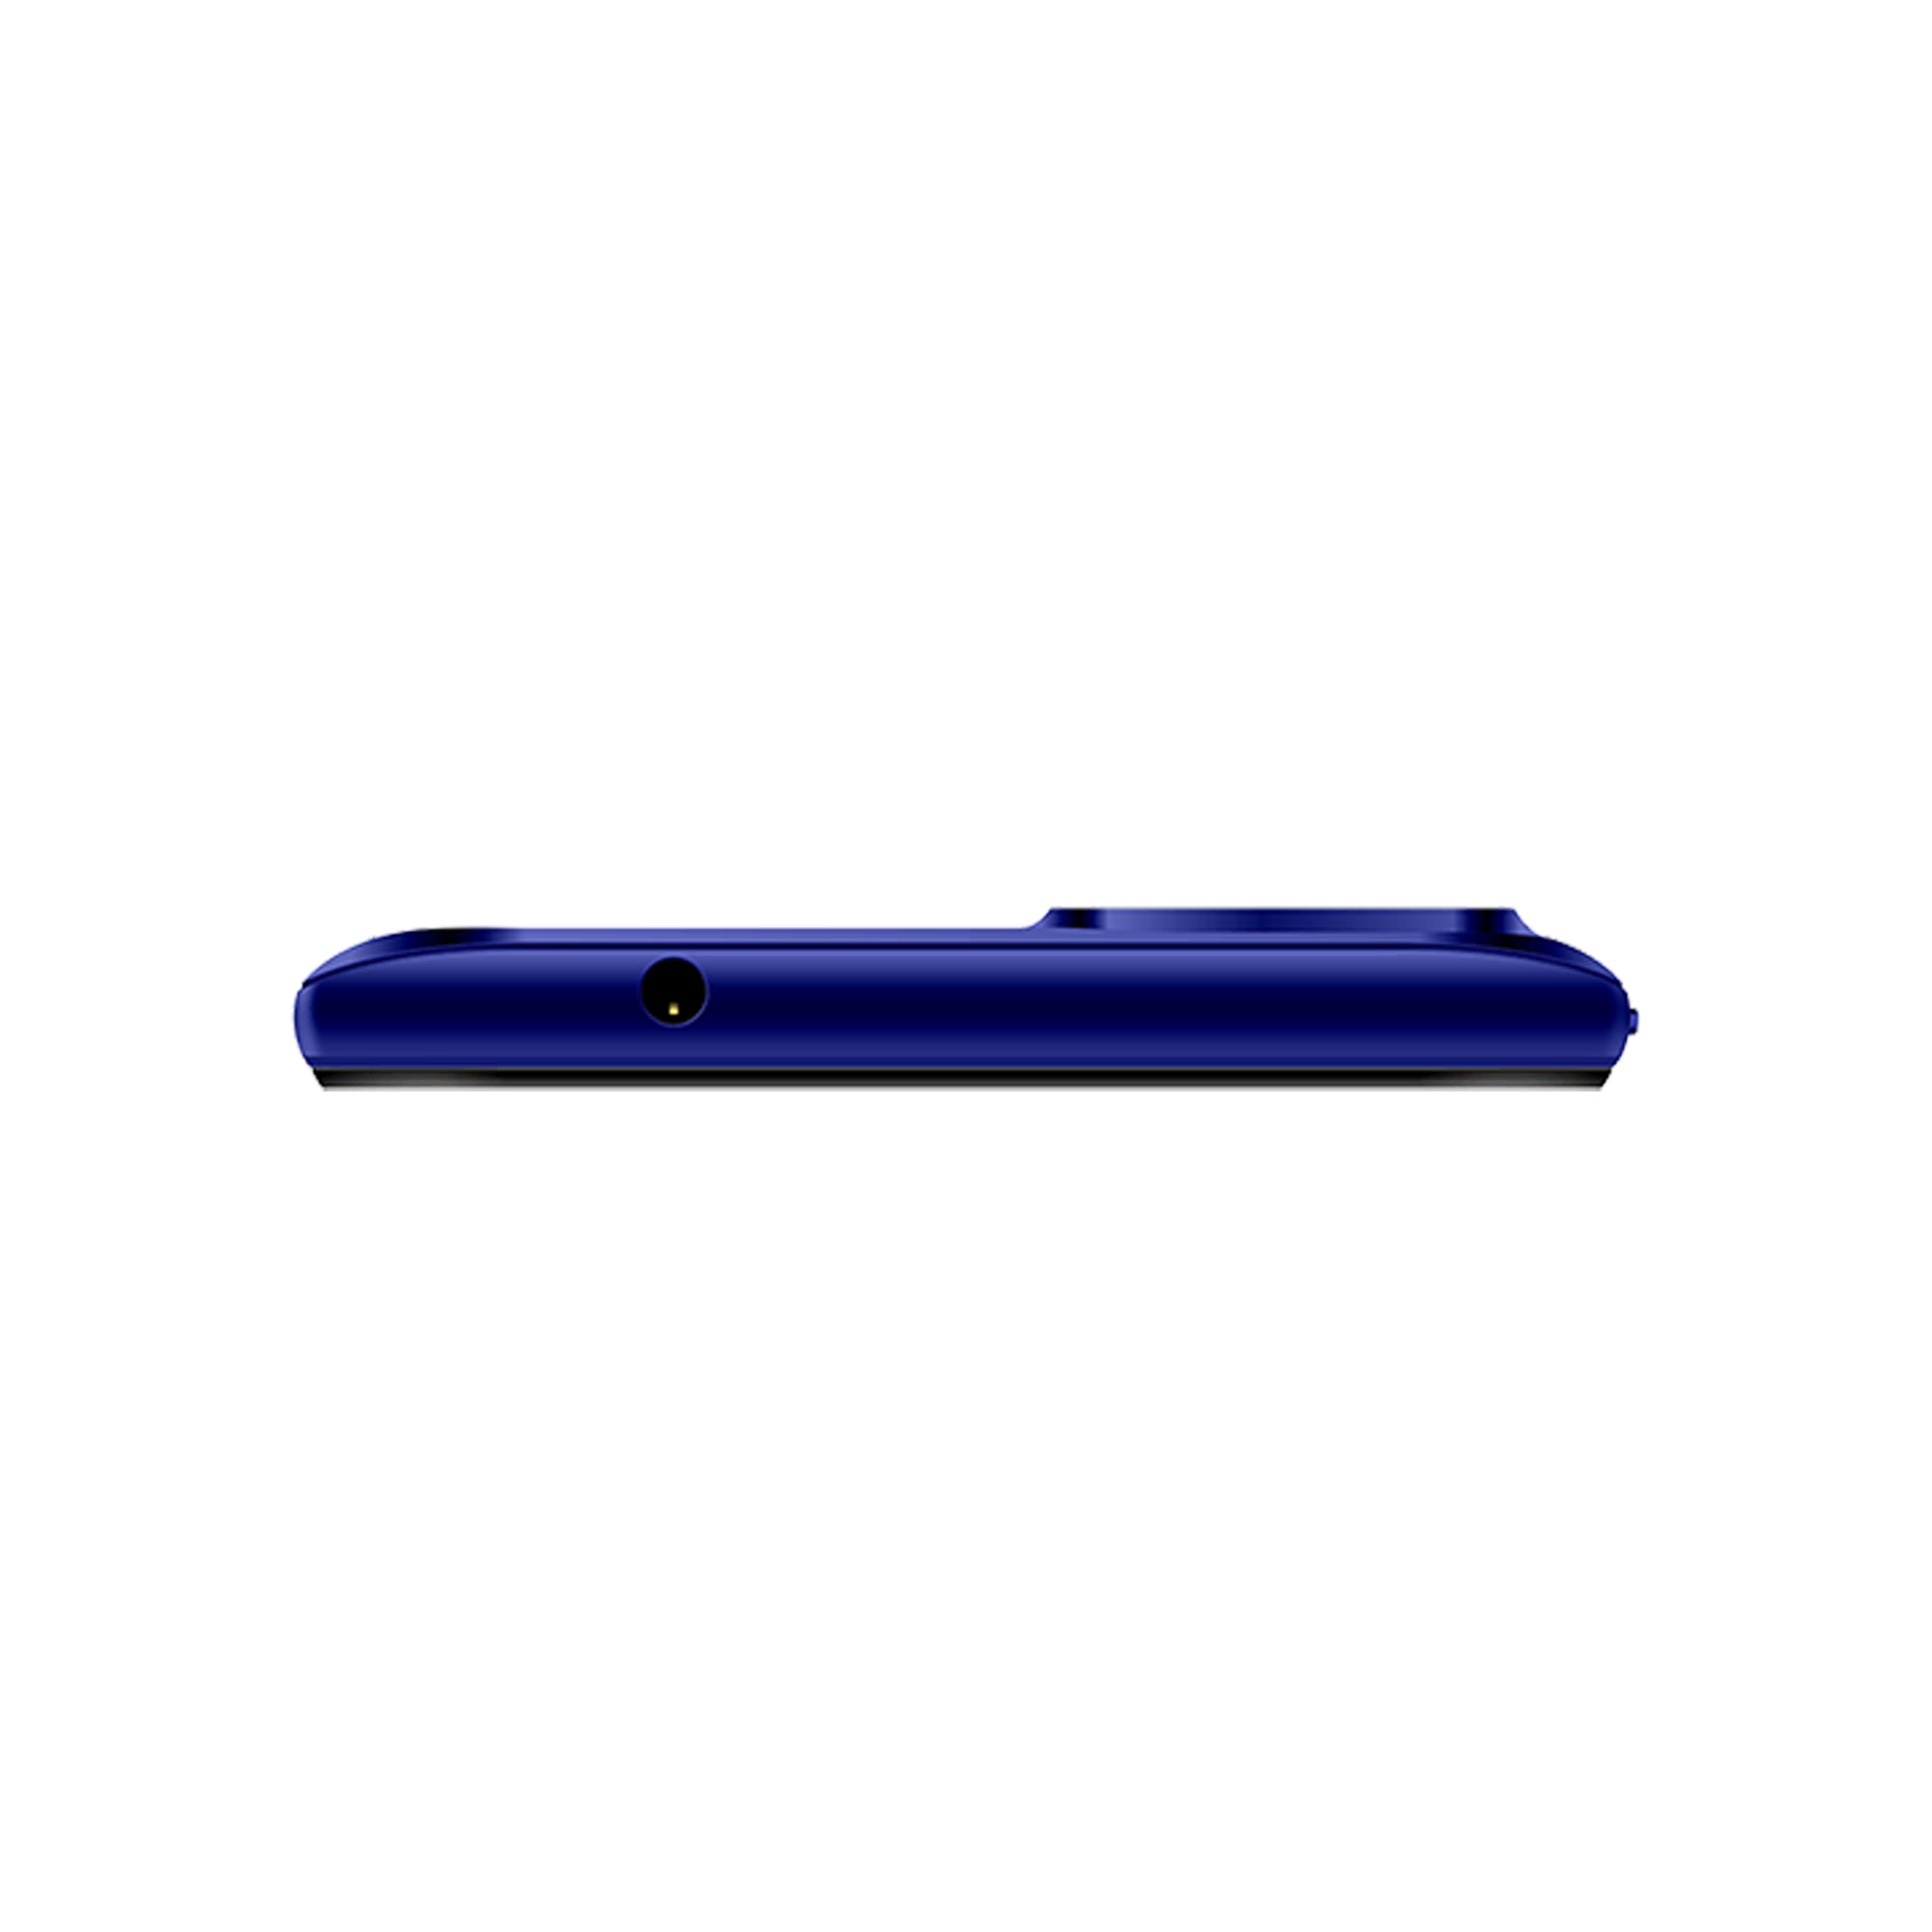 REEDER P13 Blue Plus 32 GB Mavi Android Telefon Modelleri